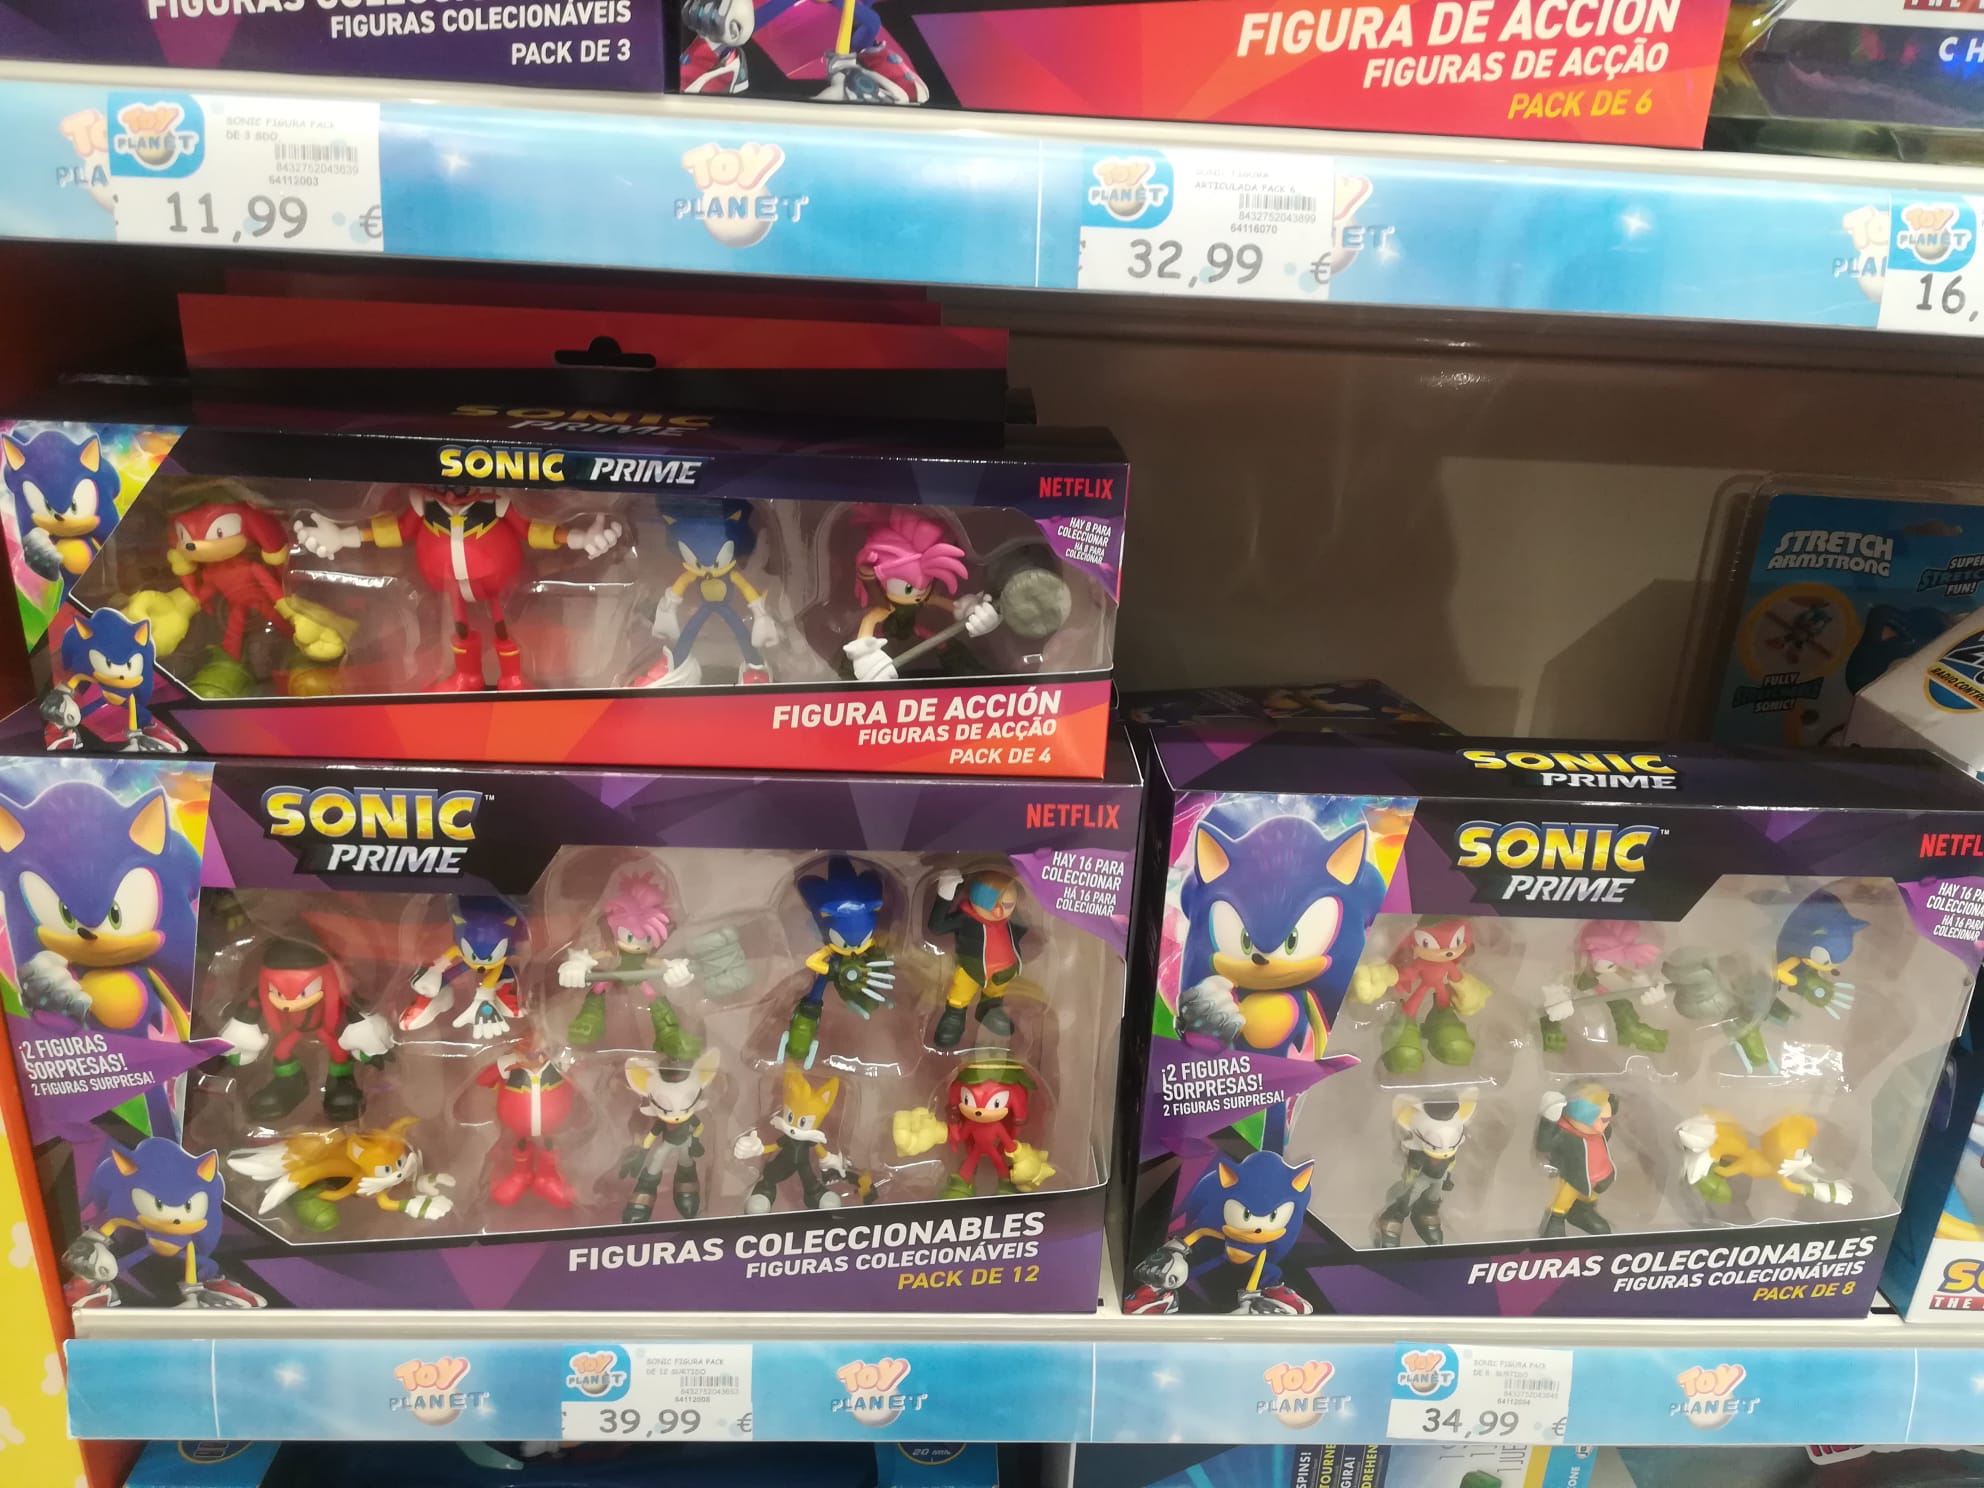 Sonic Paradise on Twitter: "Empiezan a llegar las figuras Sonic Prime a tiendas @ToyPlanetSL en España! https://t.co/G64niXkXv0" / Twitter